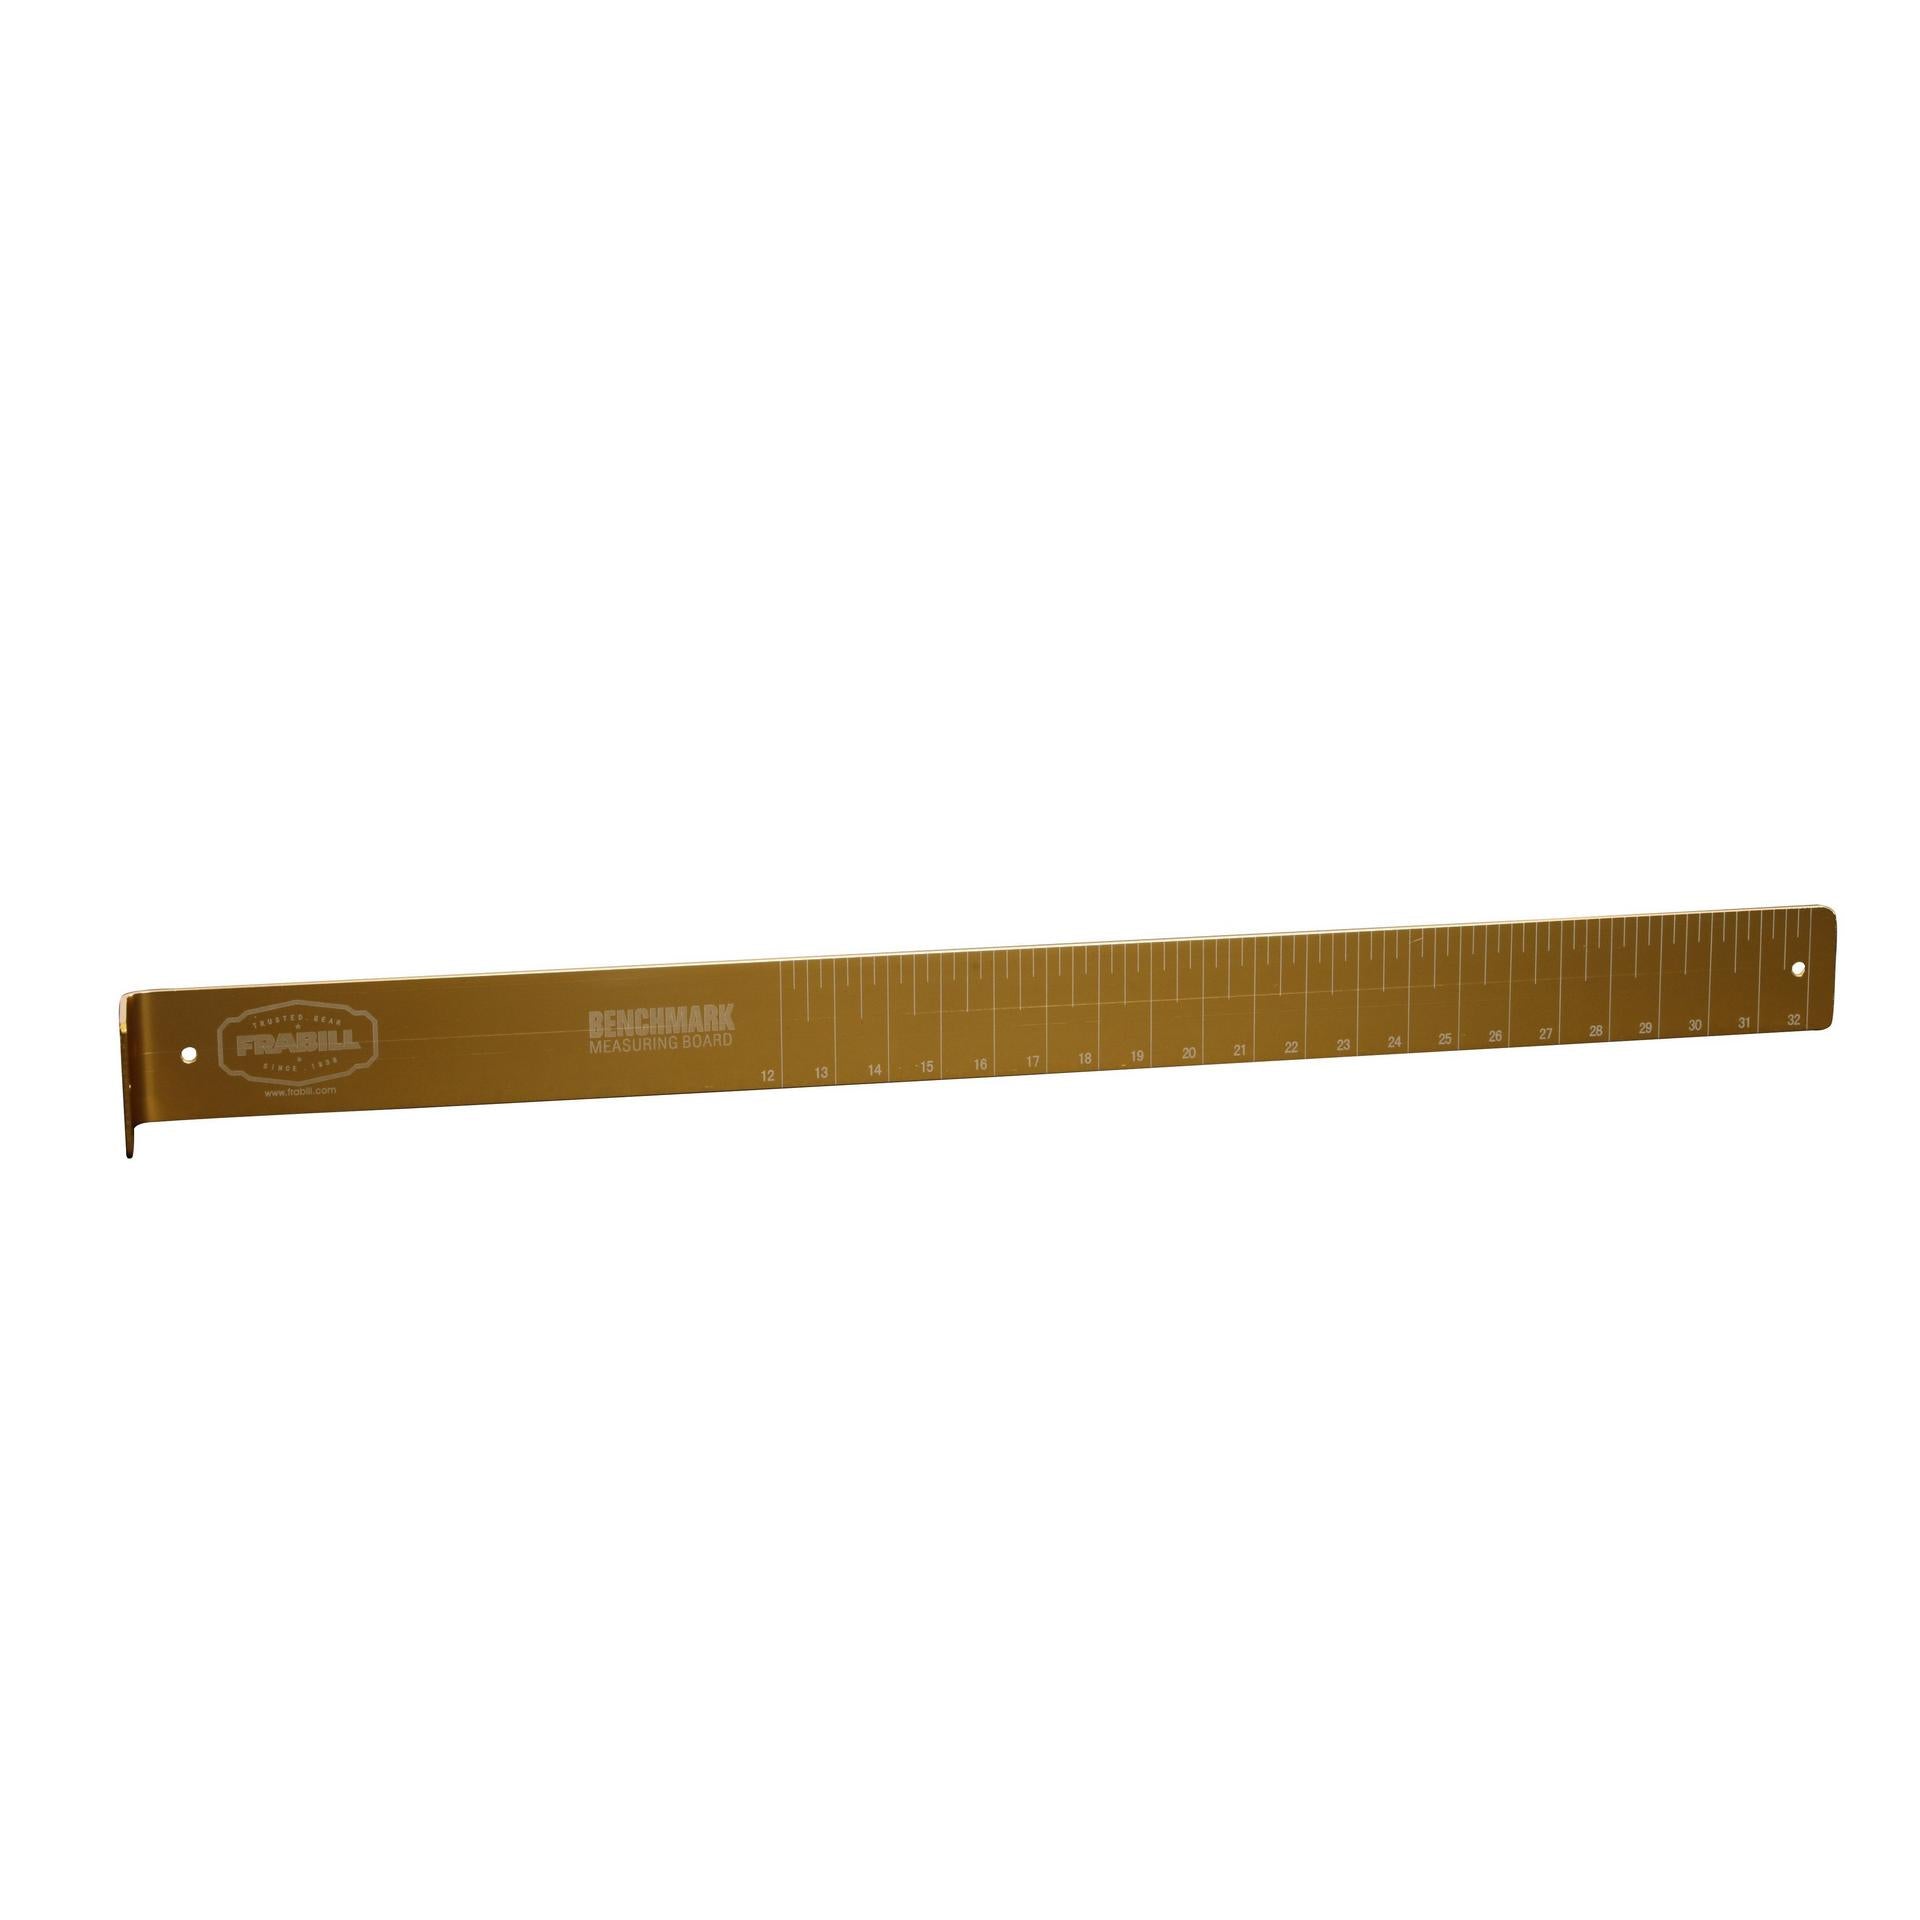 Frabill Benchmark® Measuring Board